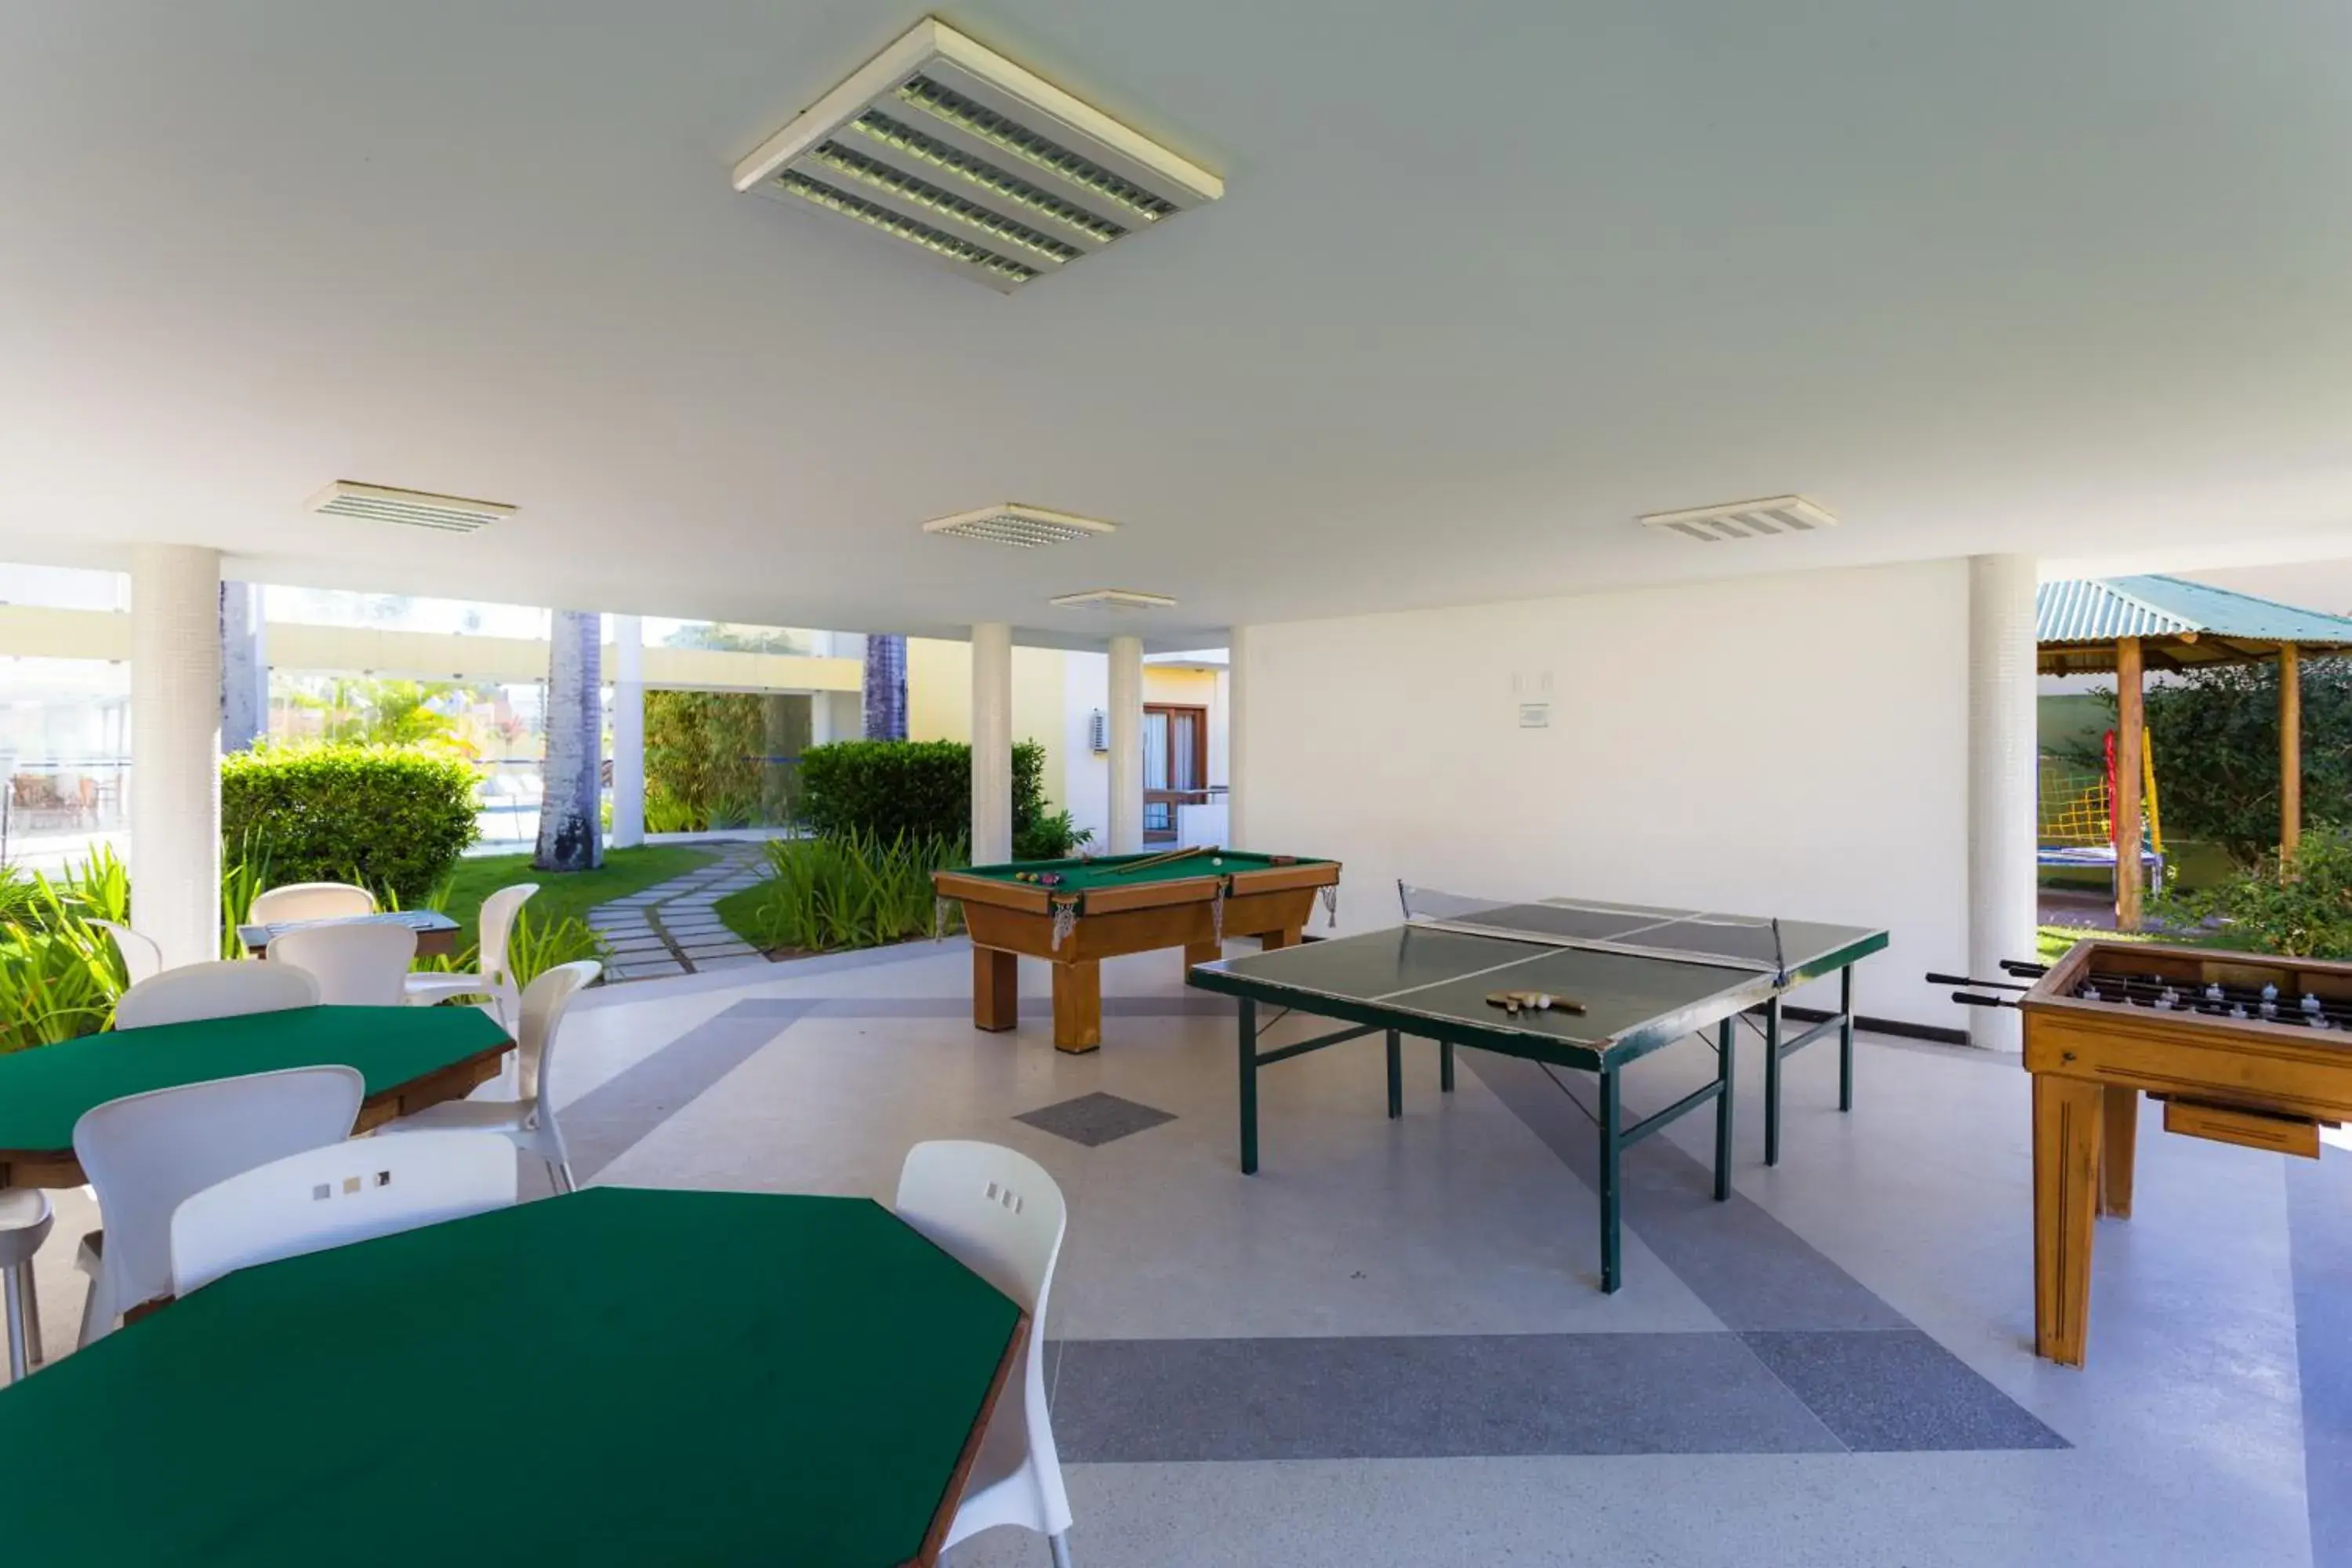 Game Room, Table Tennis in Sunshine Praia Hotel